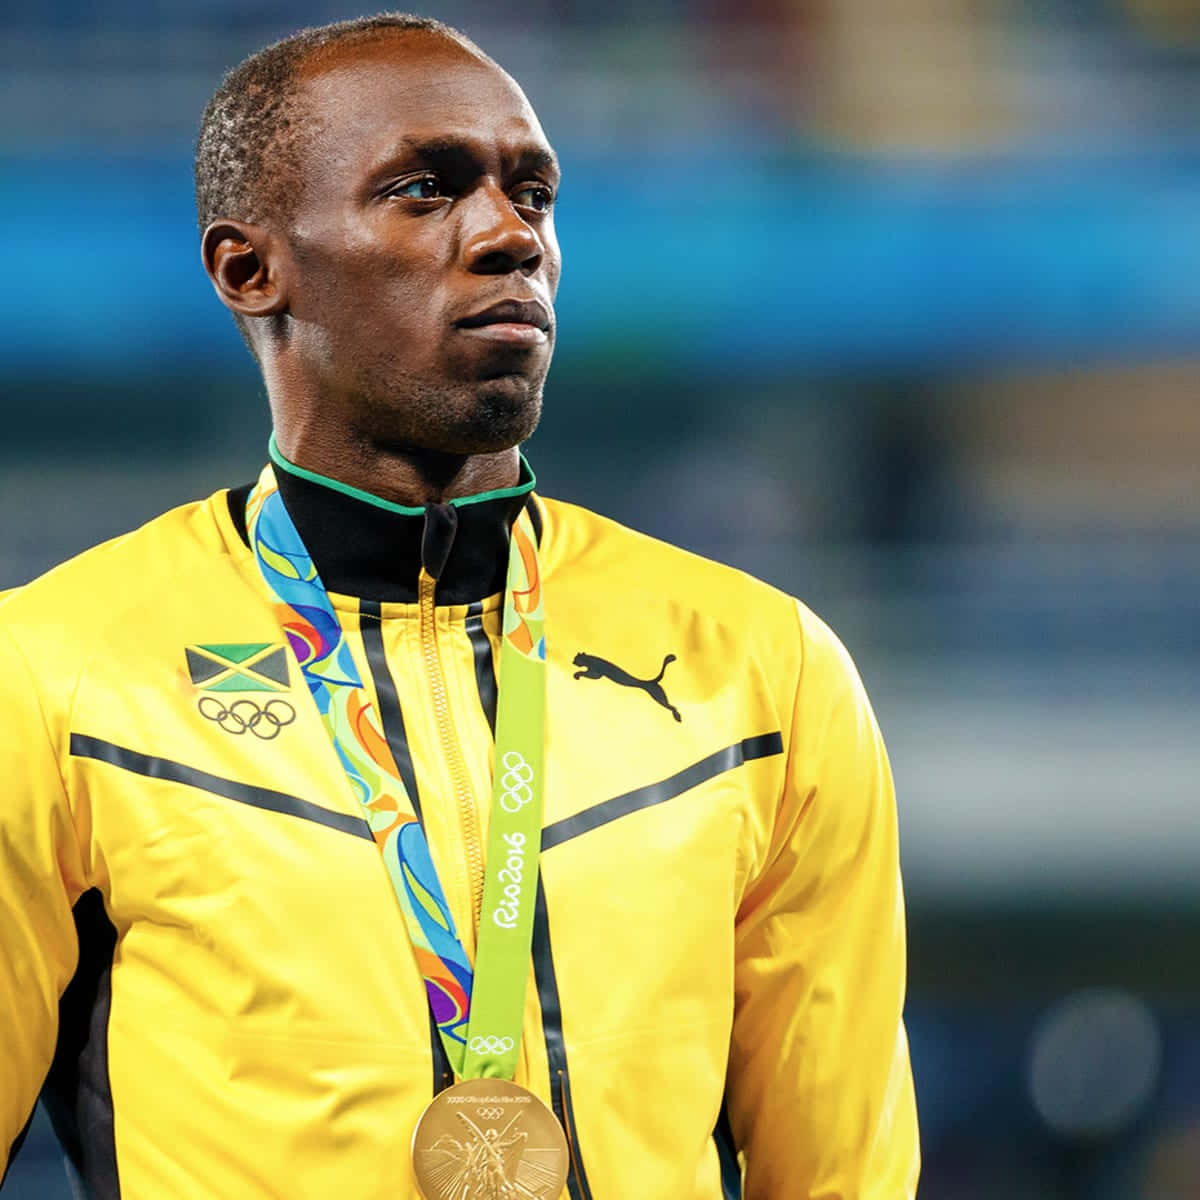 Jamaicanskaidrottaren Usain Bolt Ser Målmedveten Ut. Wallpaper